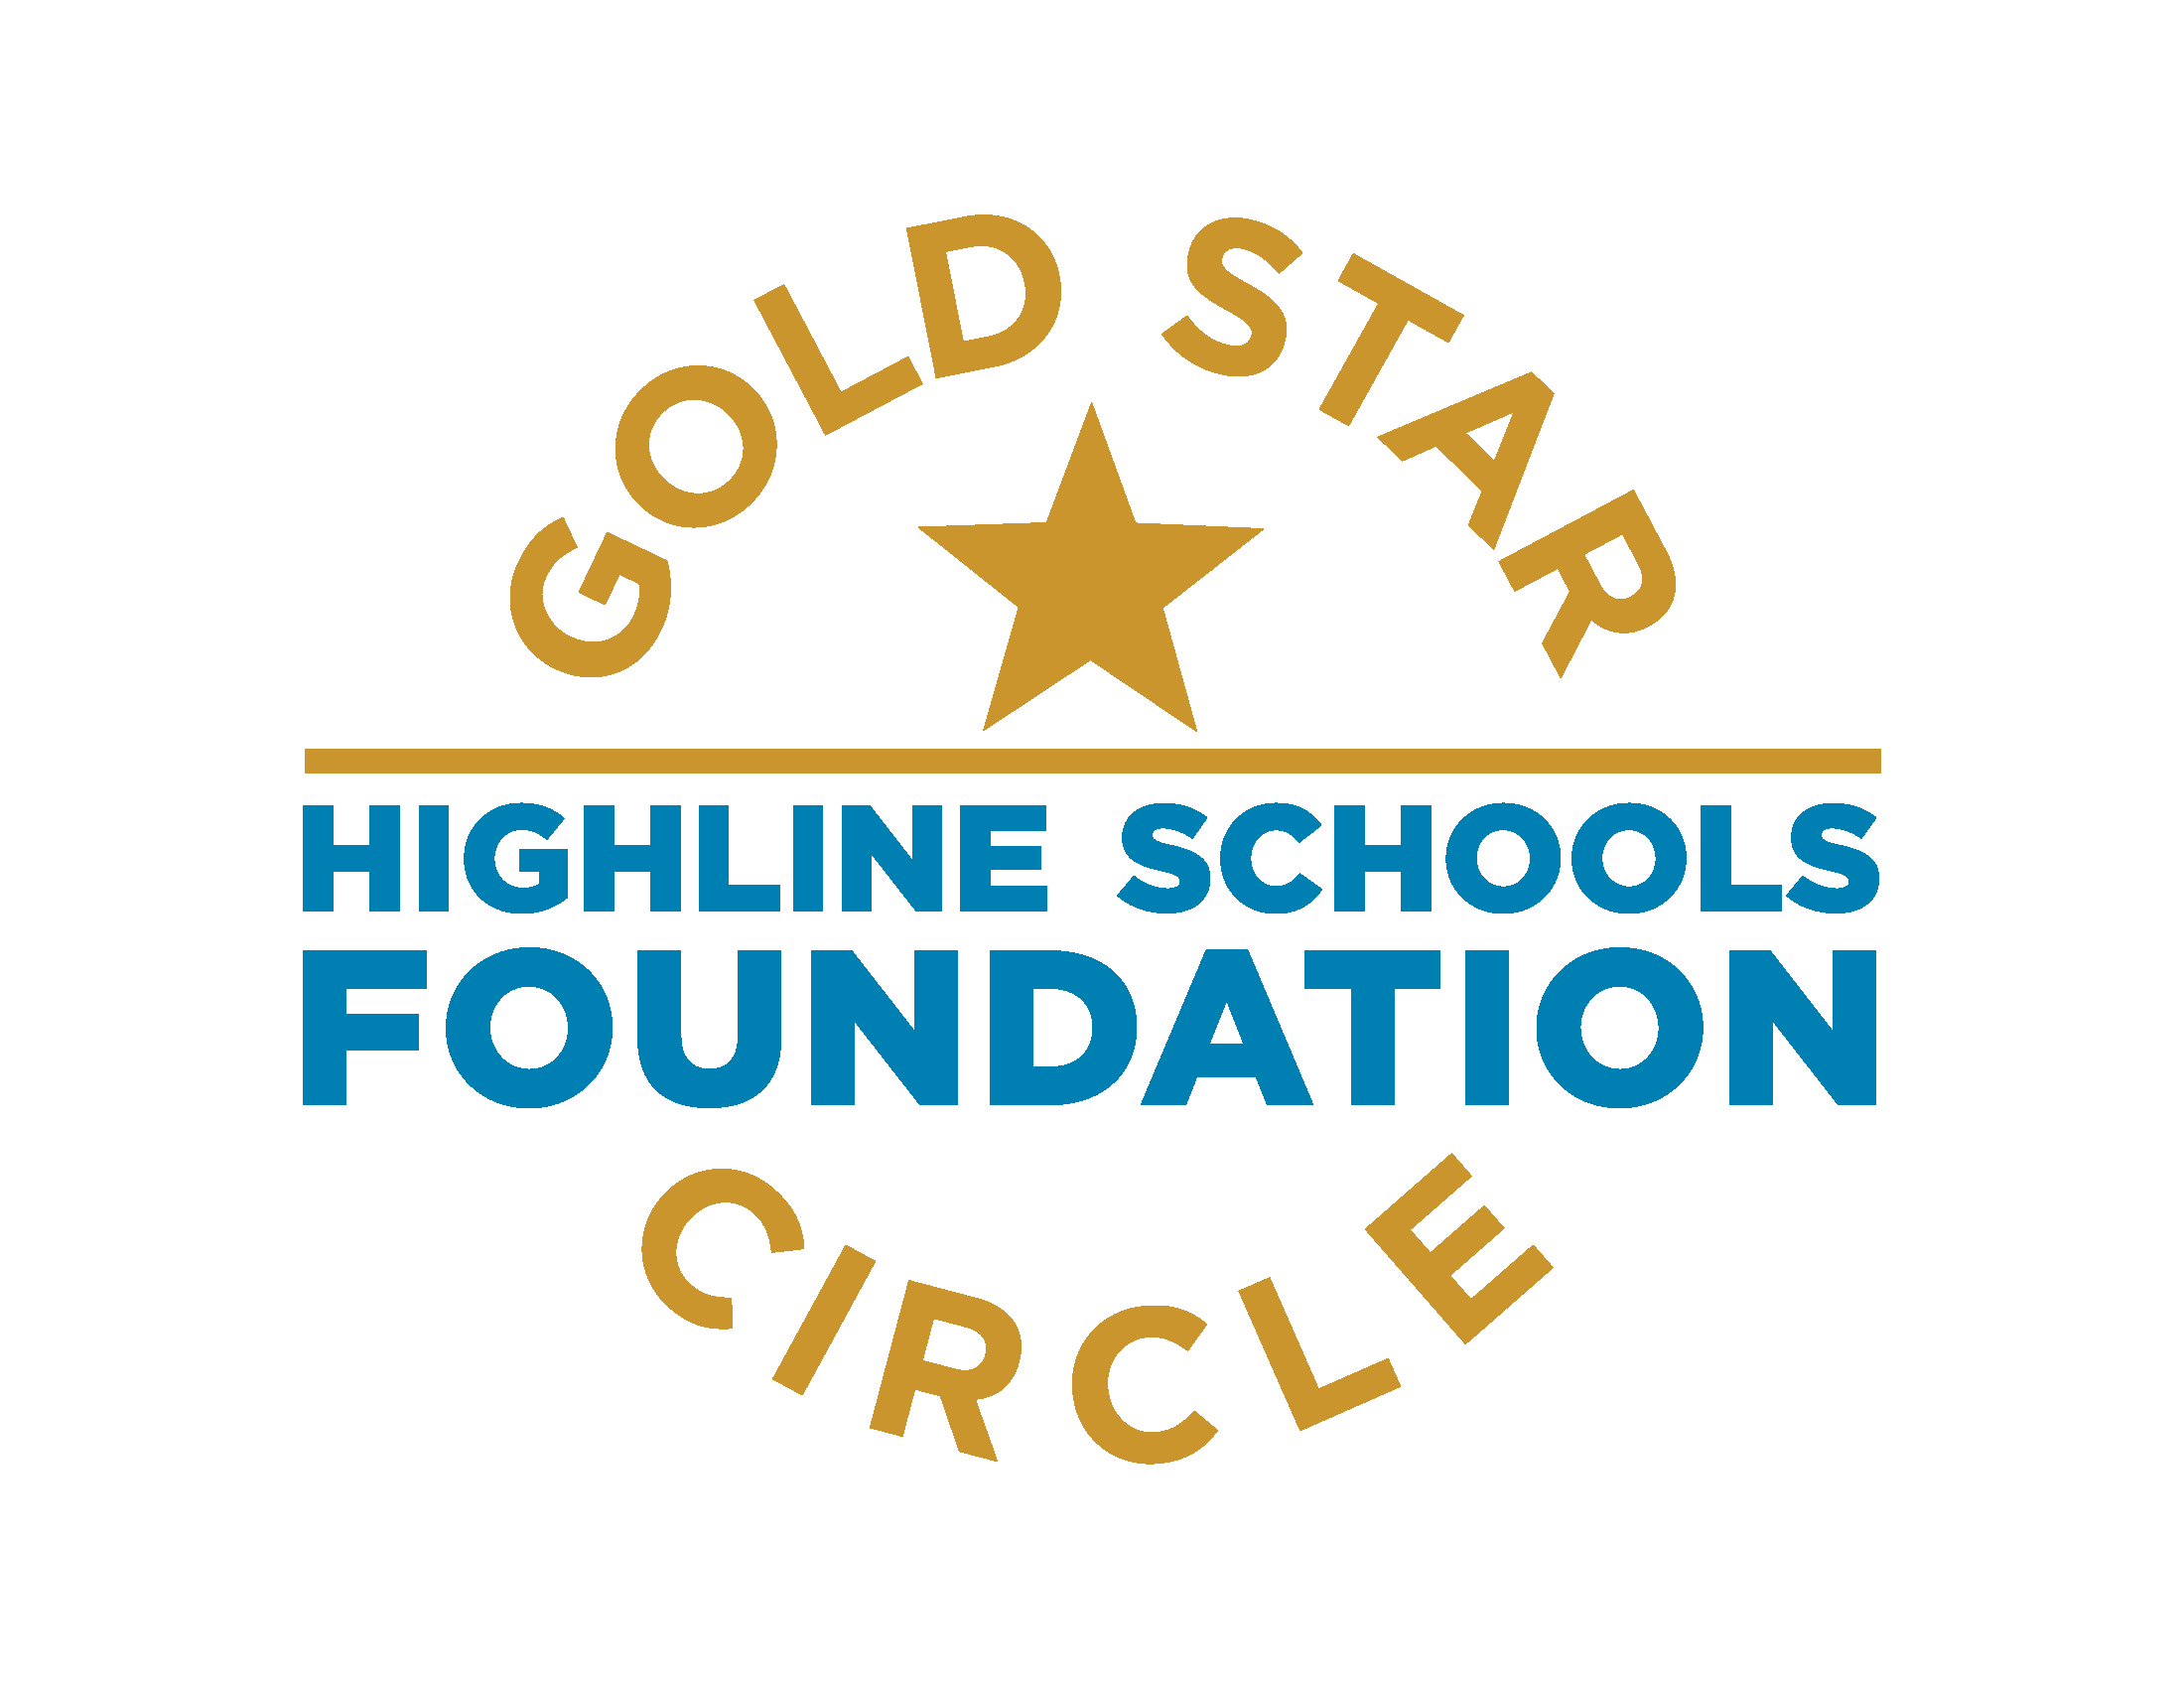 Gold Star in Circle Logo - Gold Star Circle